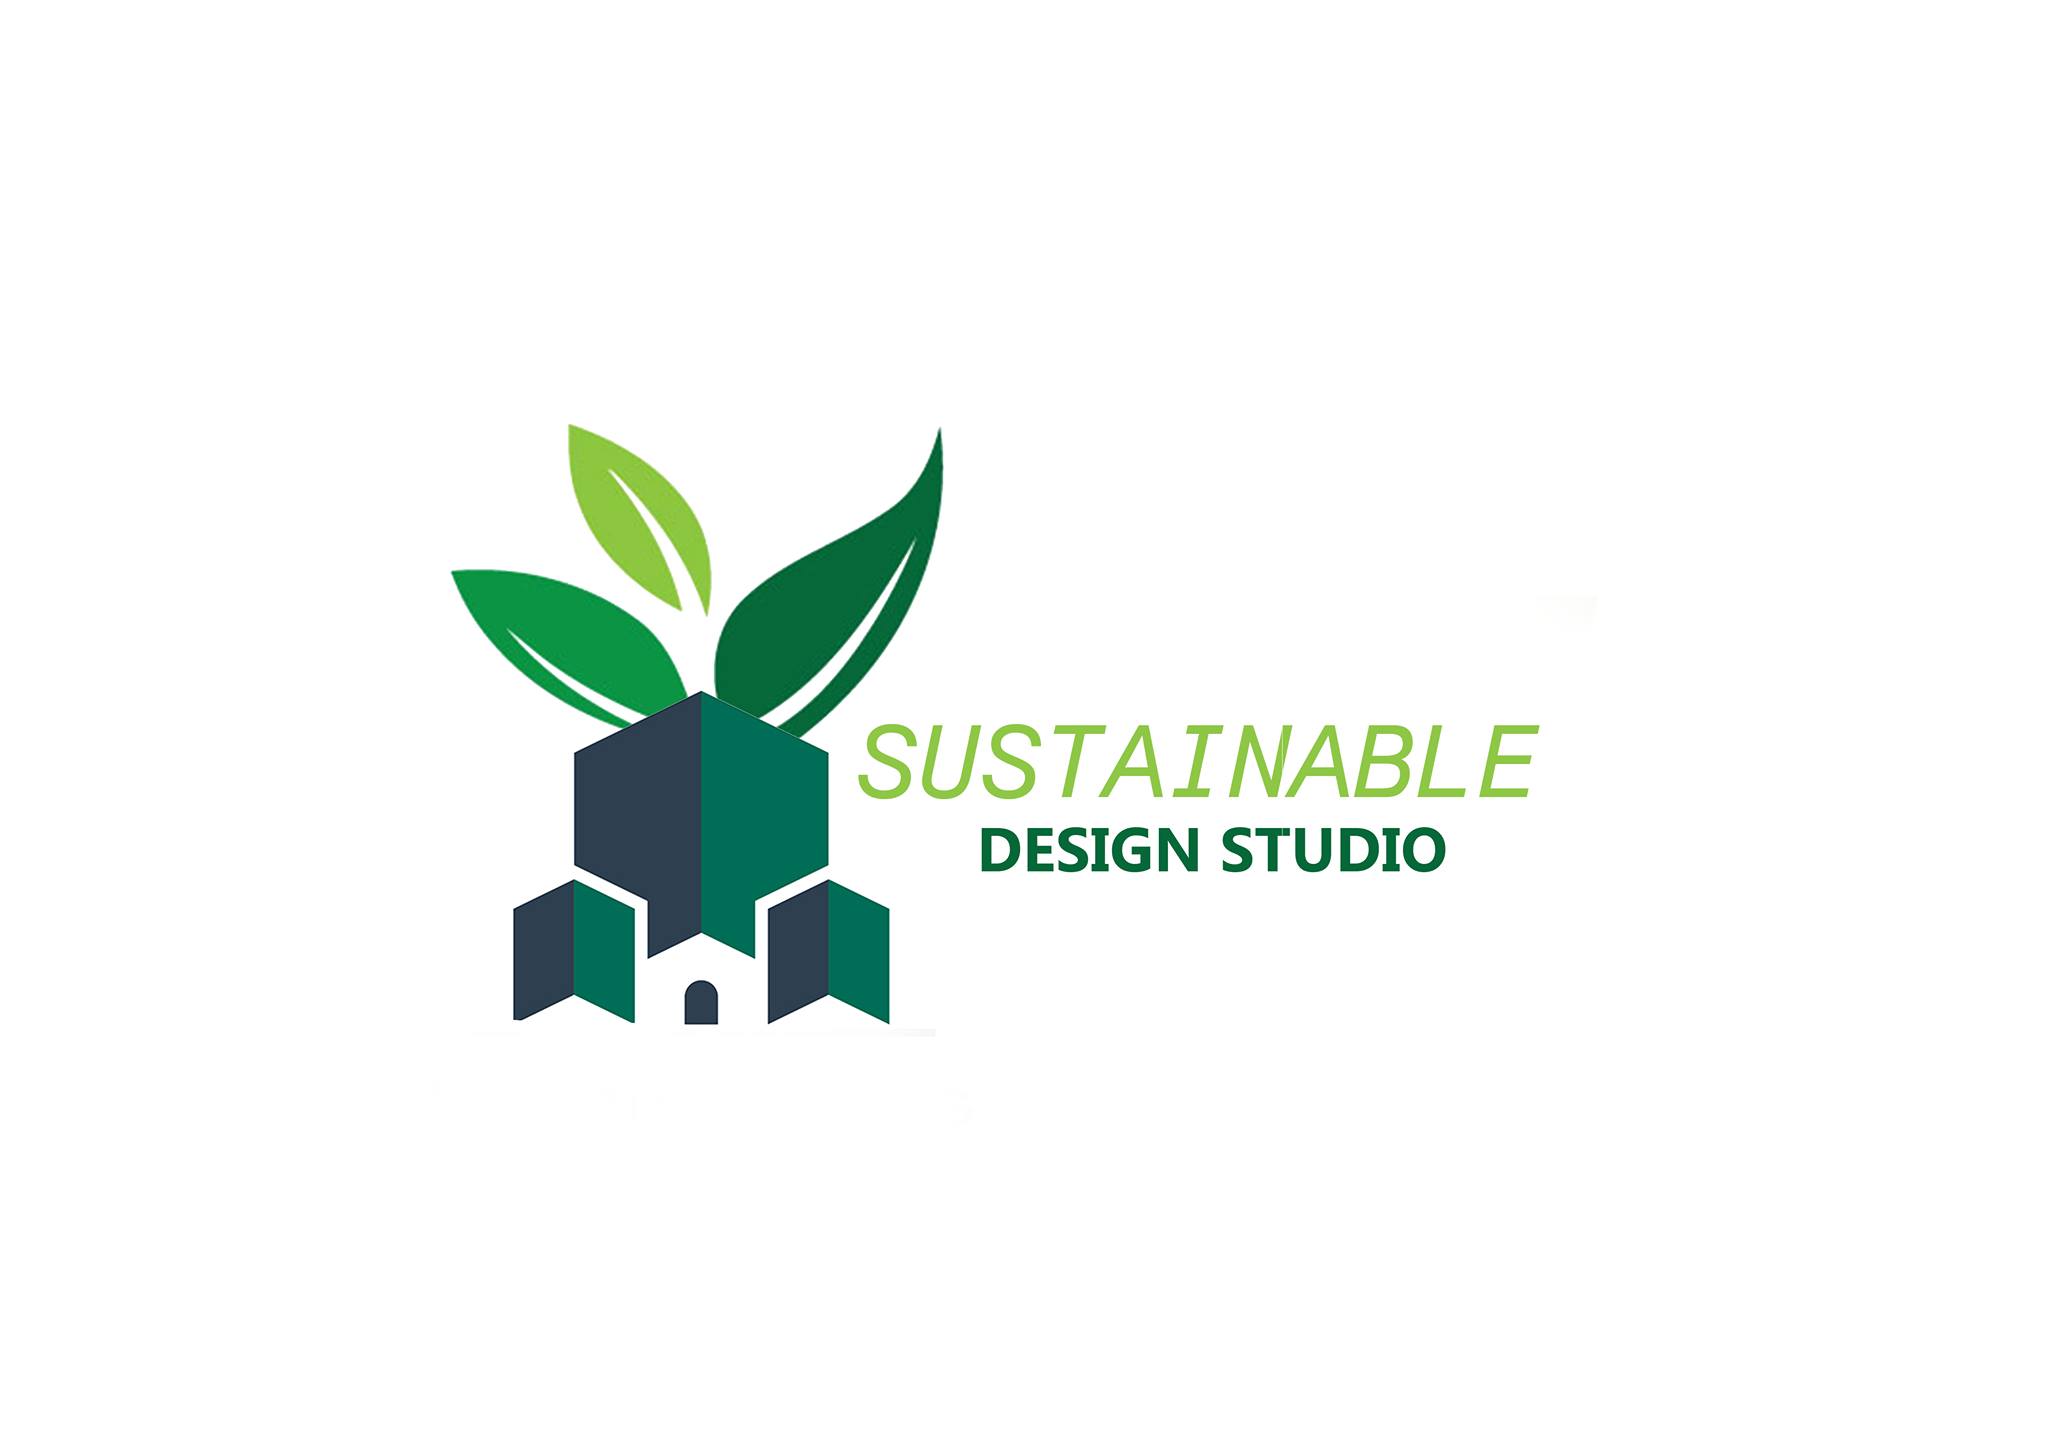 Sustainable design studio|Architect|Professional Services